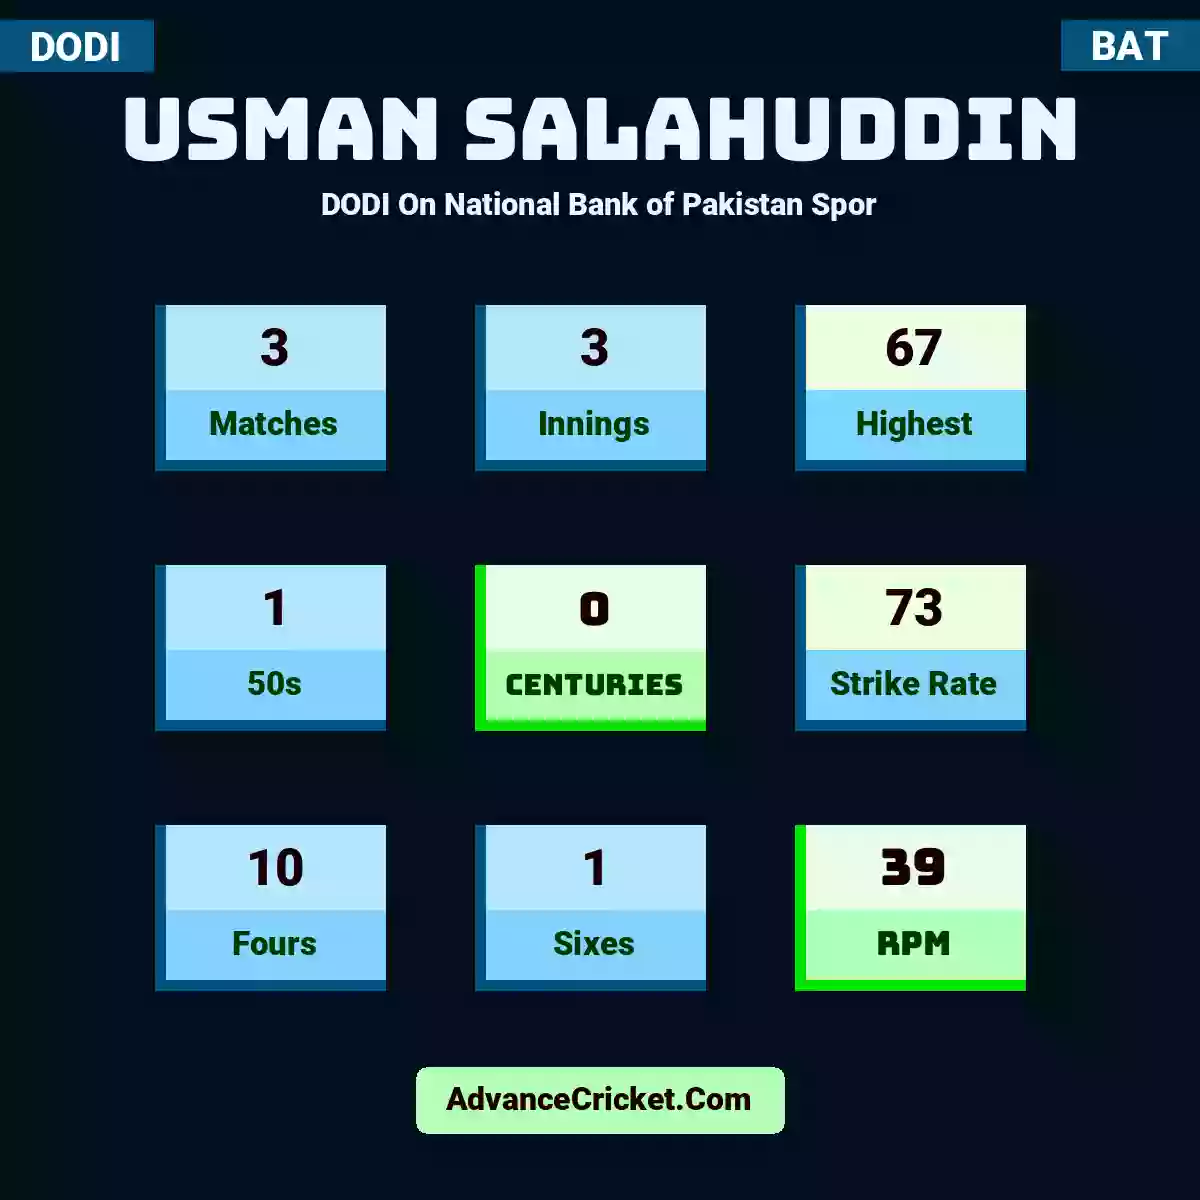 Usman Salahuddin DODI  On National Bank of Pakistan Spor, Usman Salahuddin played 3 matches, scored 67 runs as highest, 1 half-centuries, and 0 centuries, with a strike rate of 73. U.Salahuddin hit 10 fours and 1 sixes, with an RPM of 39.